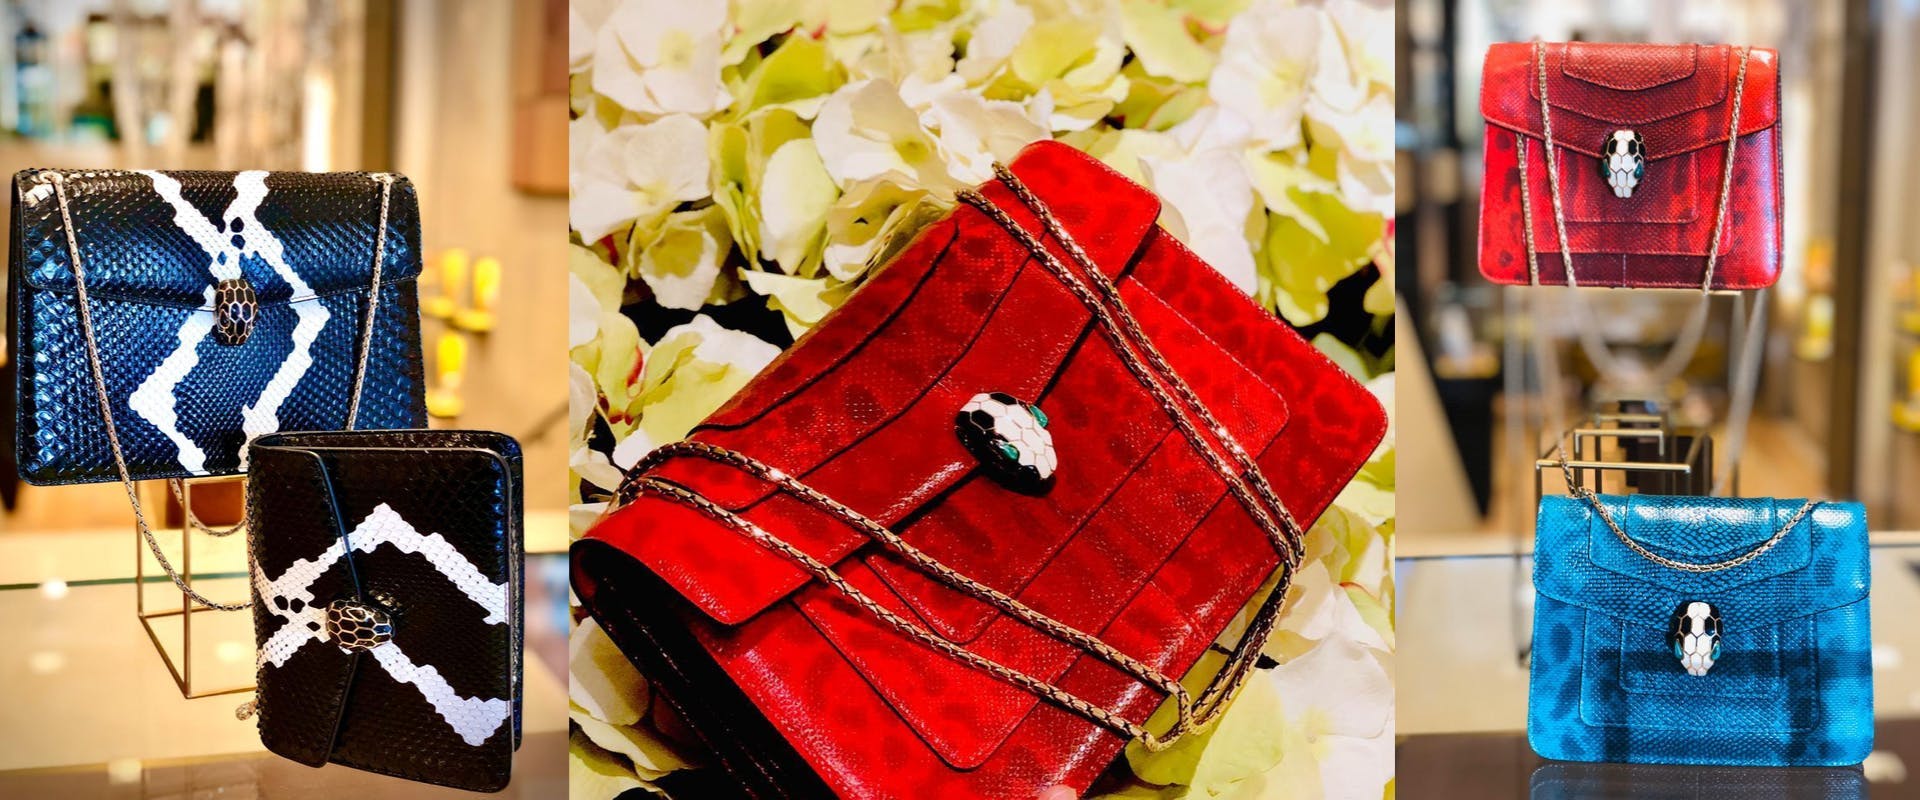 purse bag accessories handbag accessory plant